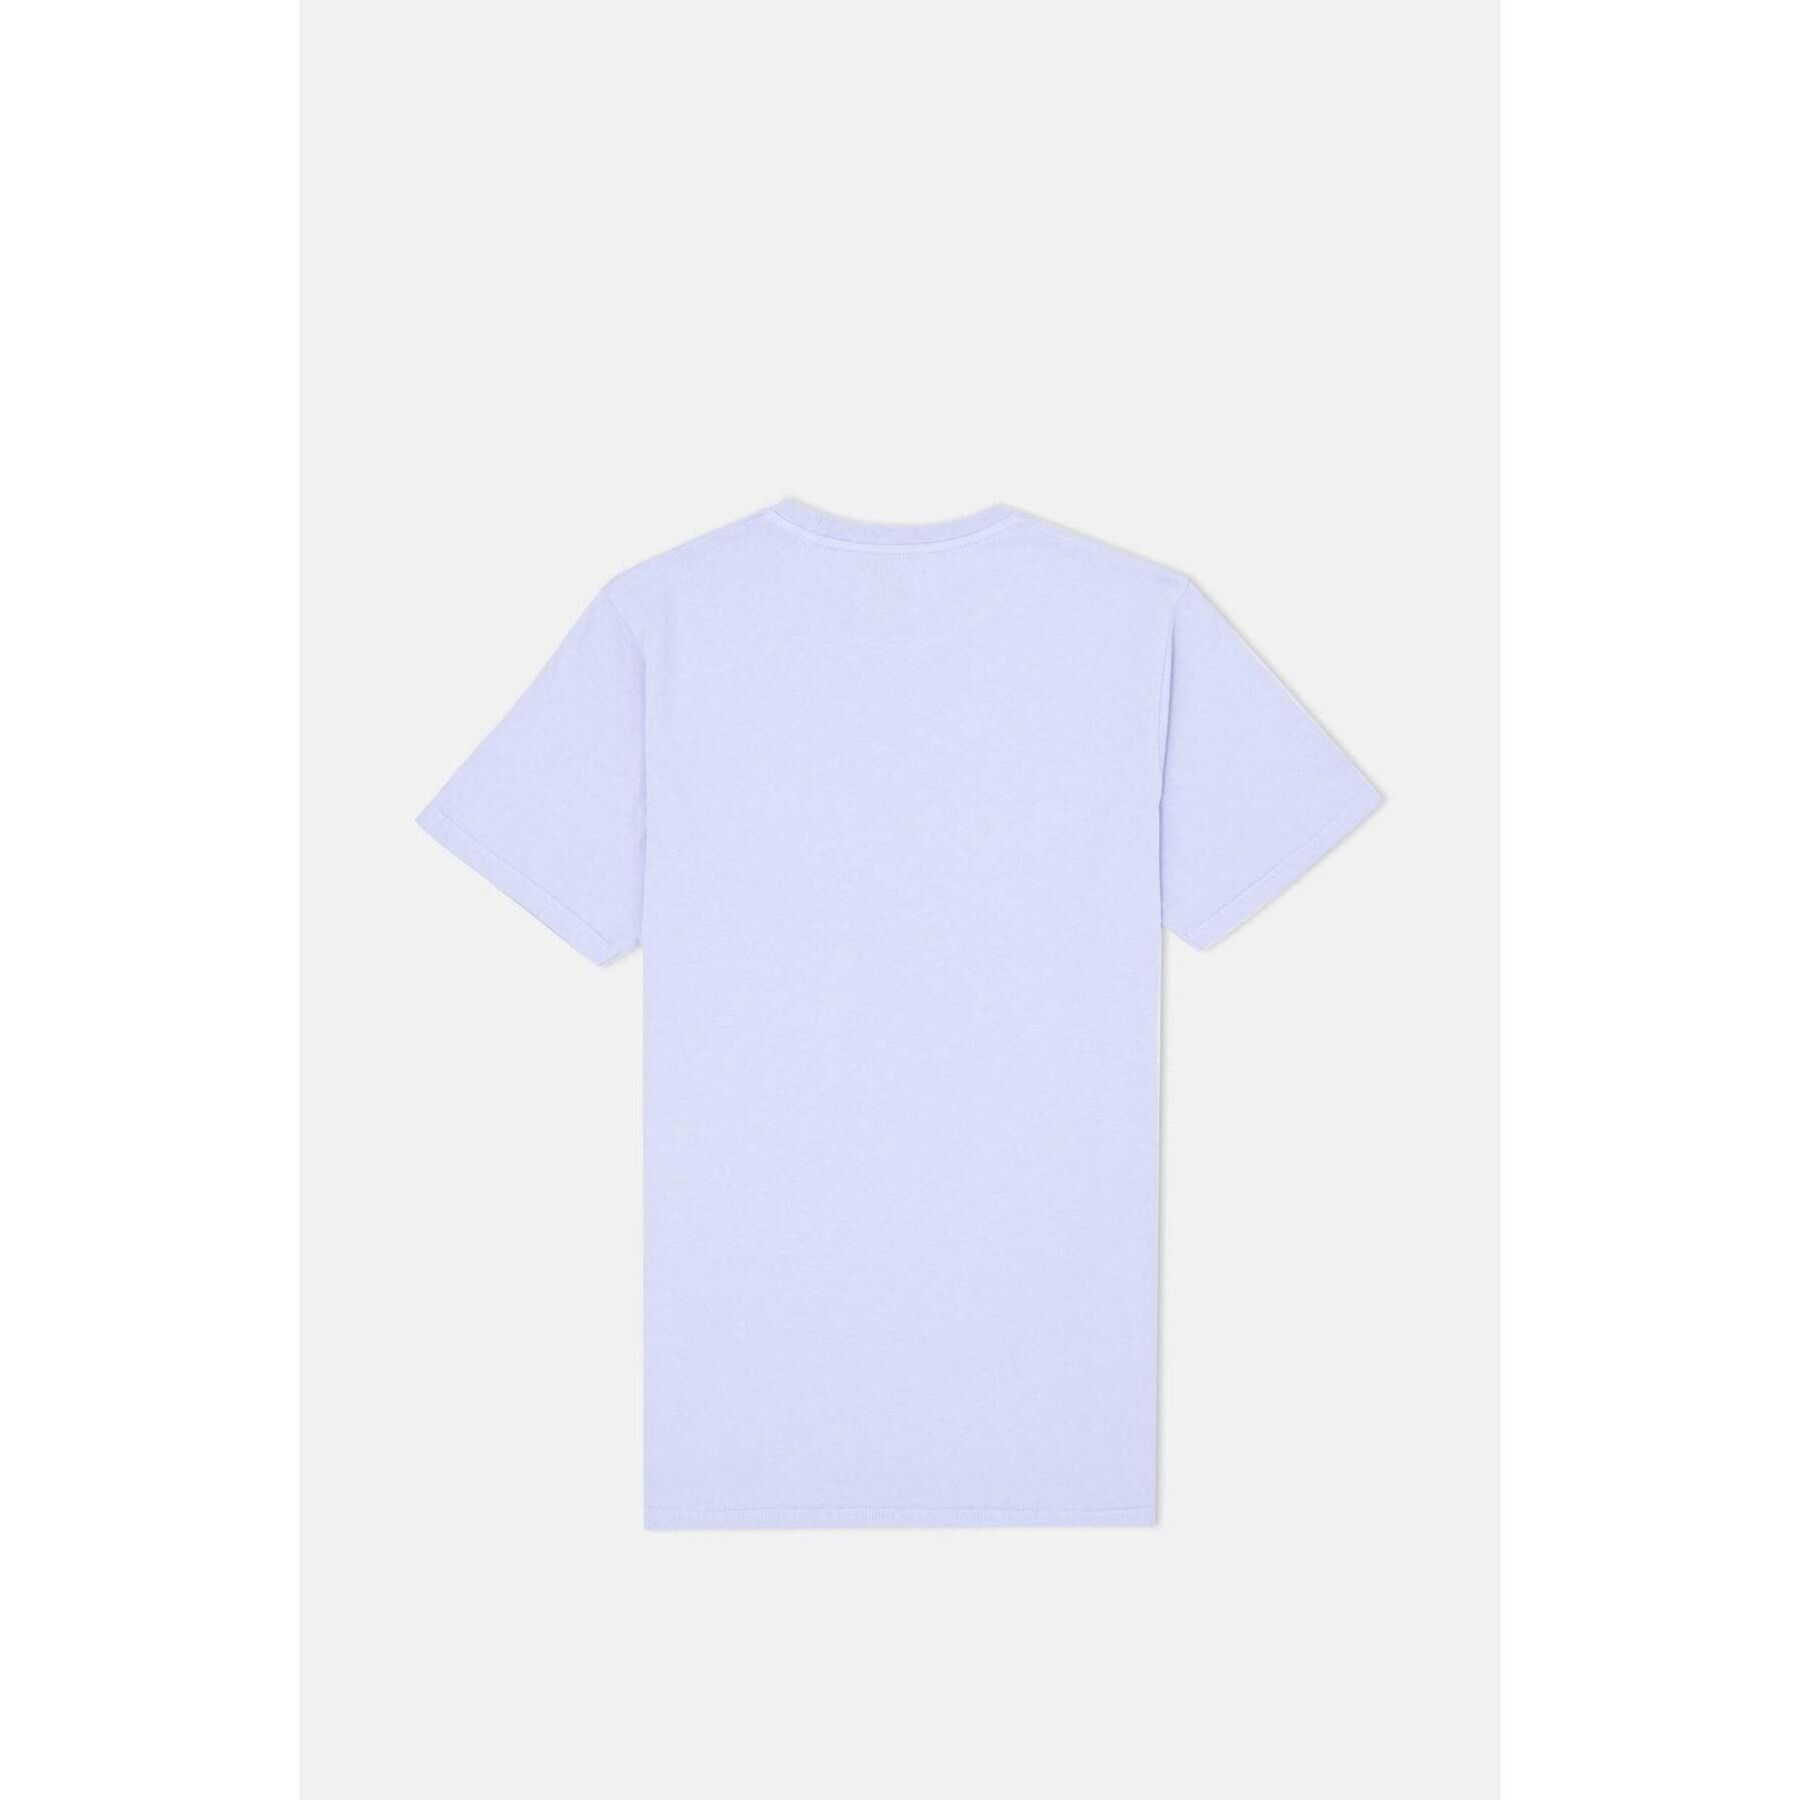 T-shirt Colorful Standard Soft Lavender